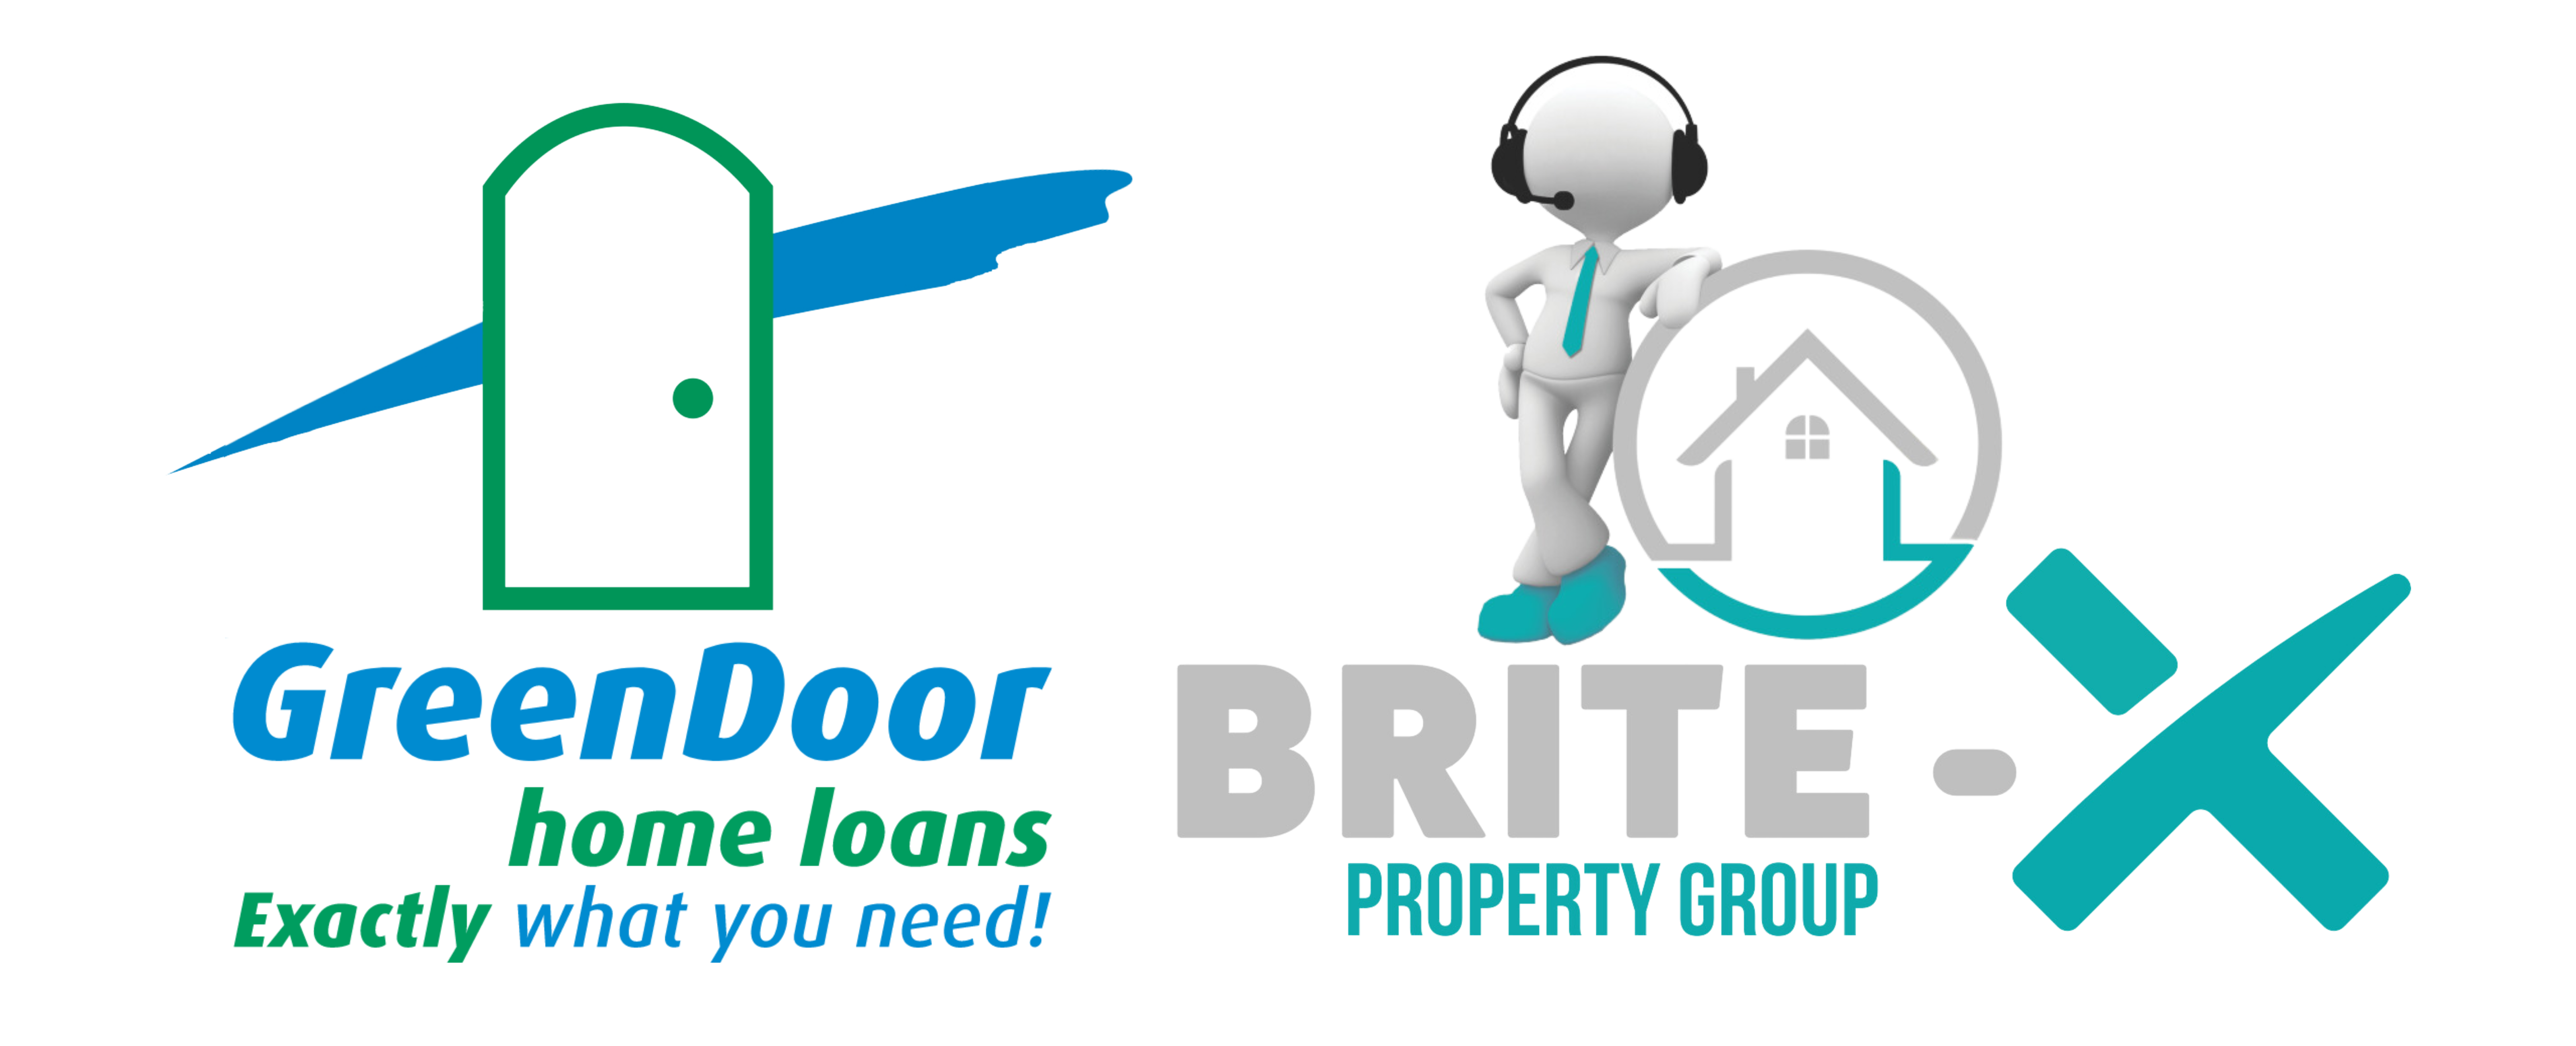 GD BRITE X Logo - Real Estate Agent Gauteng - BRITE-X Property Group